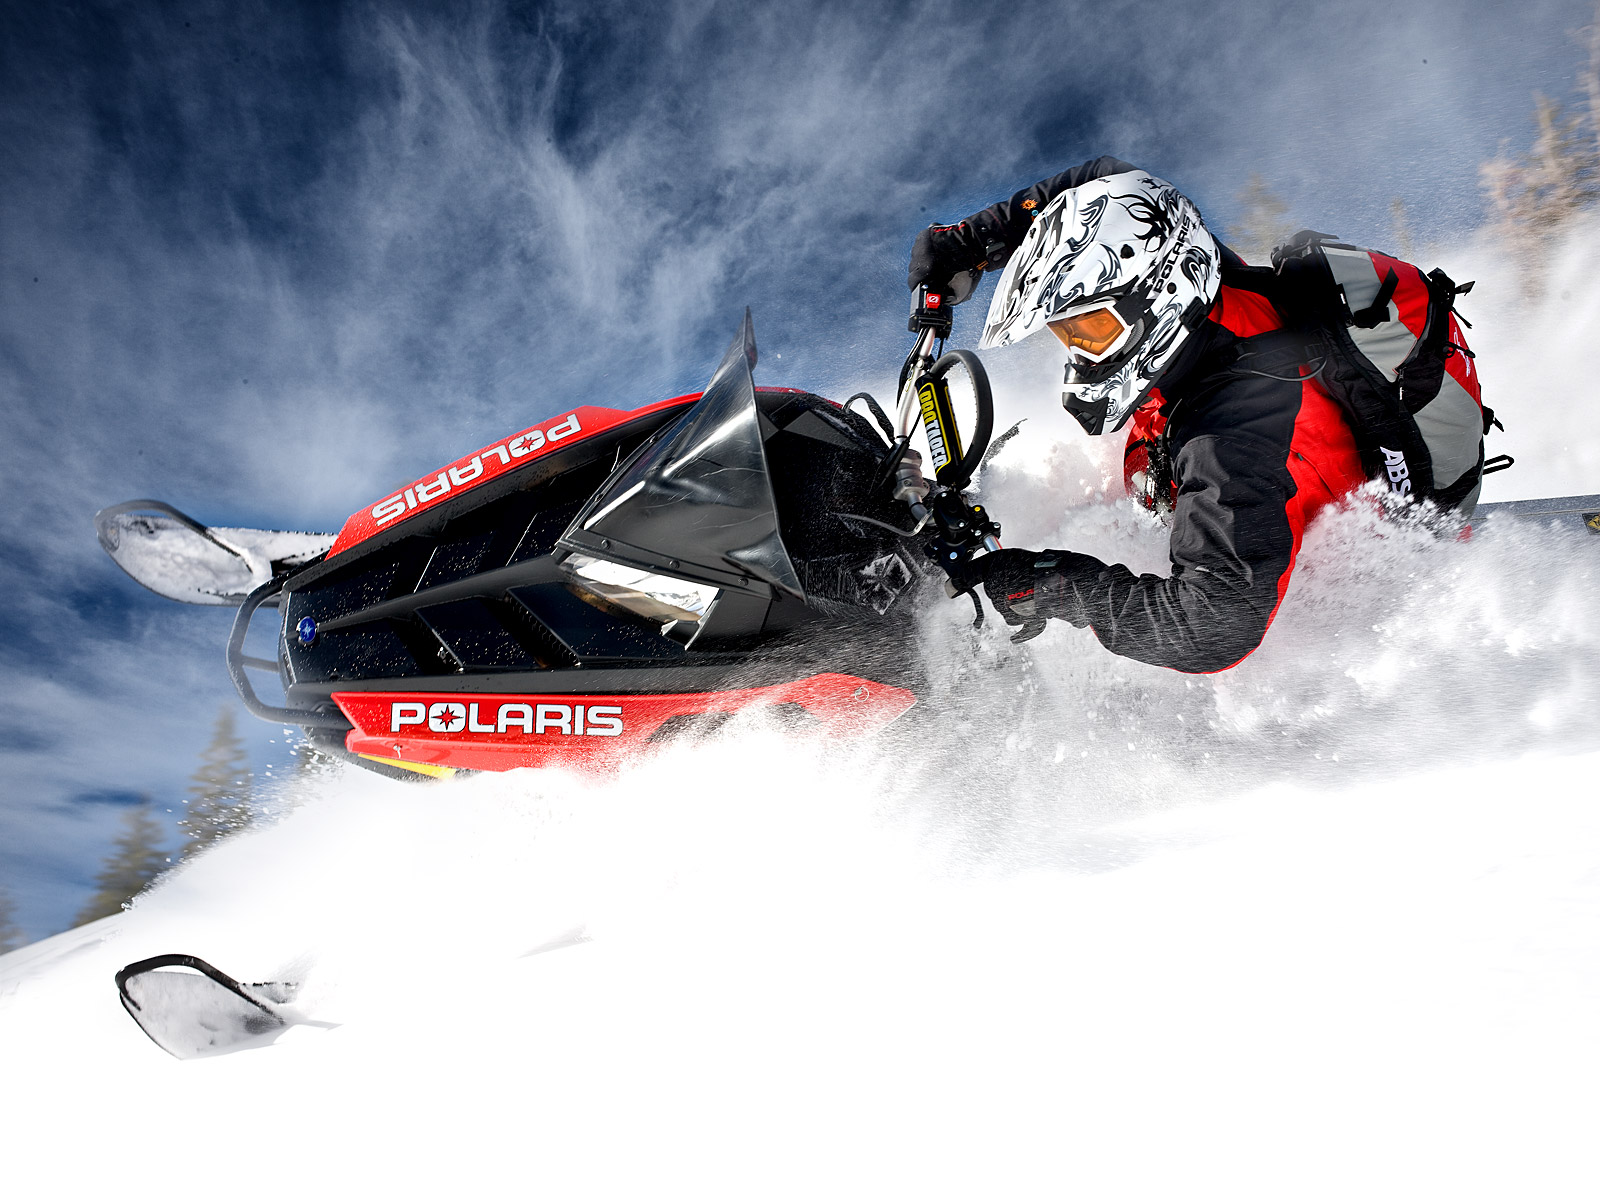 polaris wallpaper,snowmobile,snow,extreme sport,winter sport,vehicle